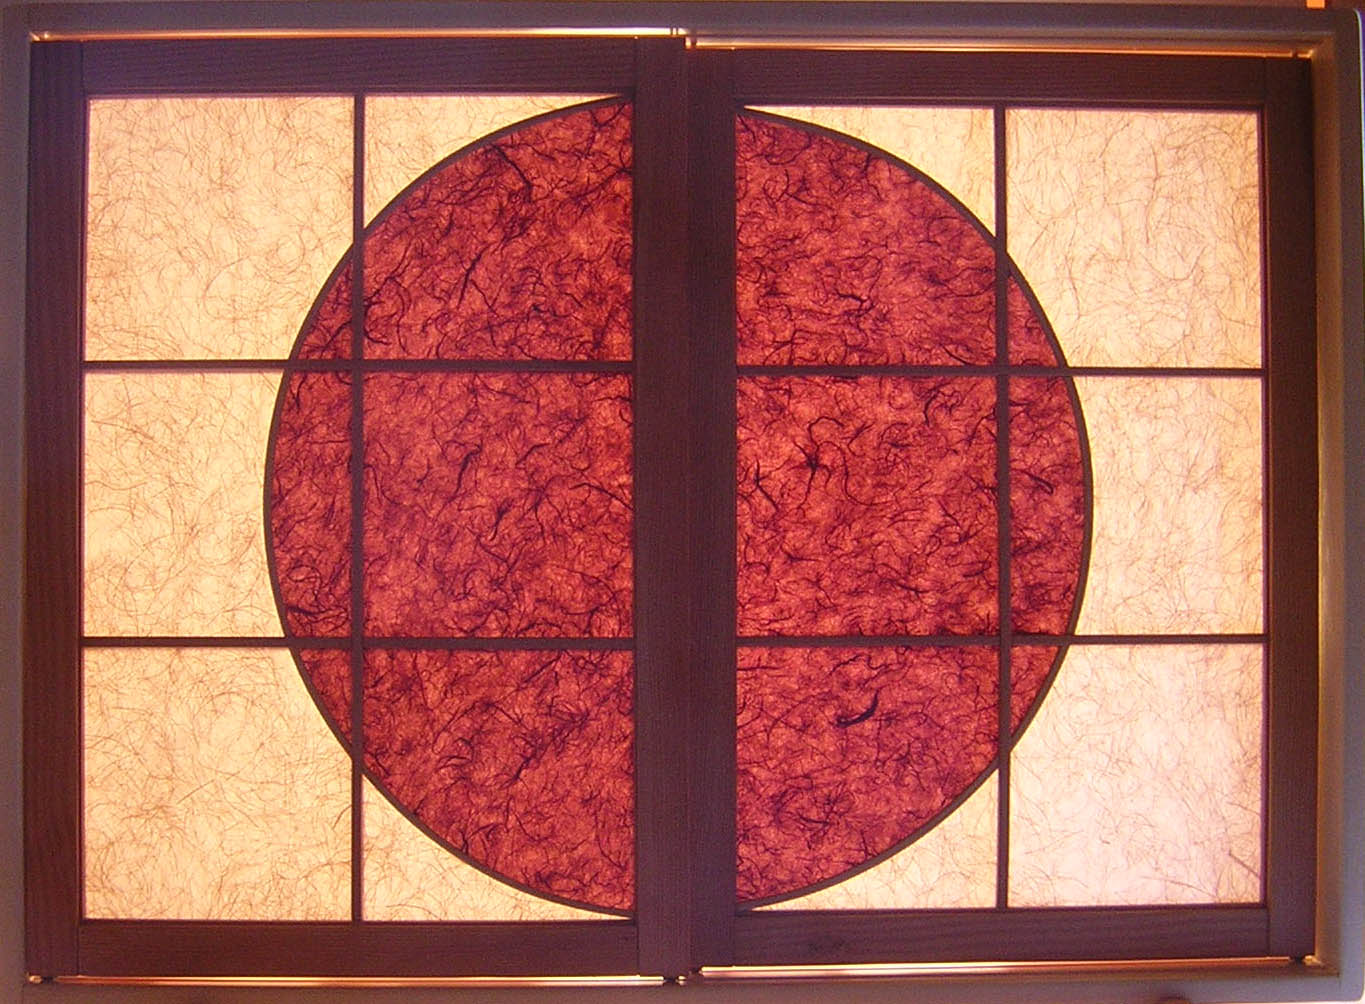 "Sol" Shoji with Burgundy Circle in Center of two  Shakti Shoji Window Panels